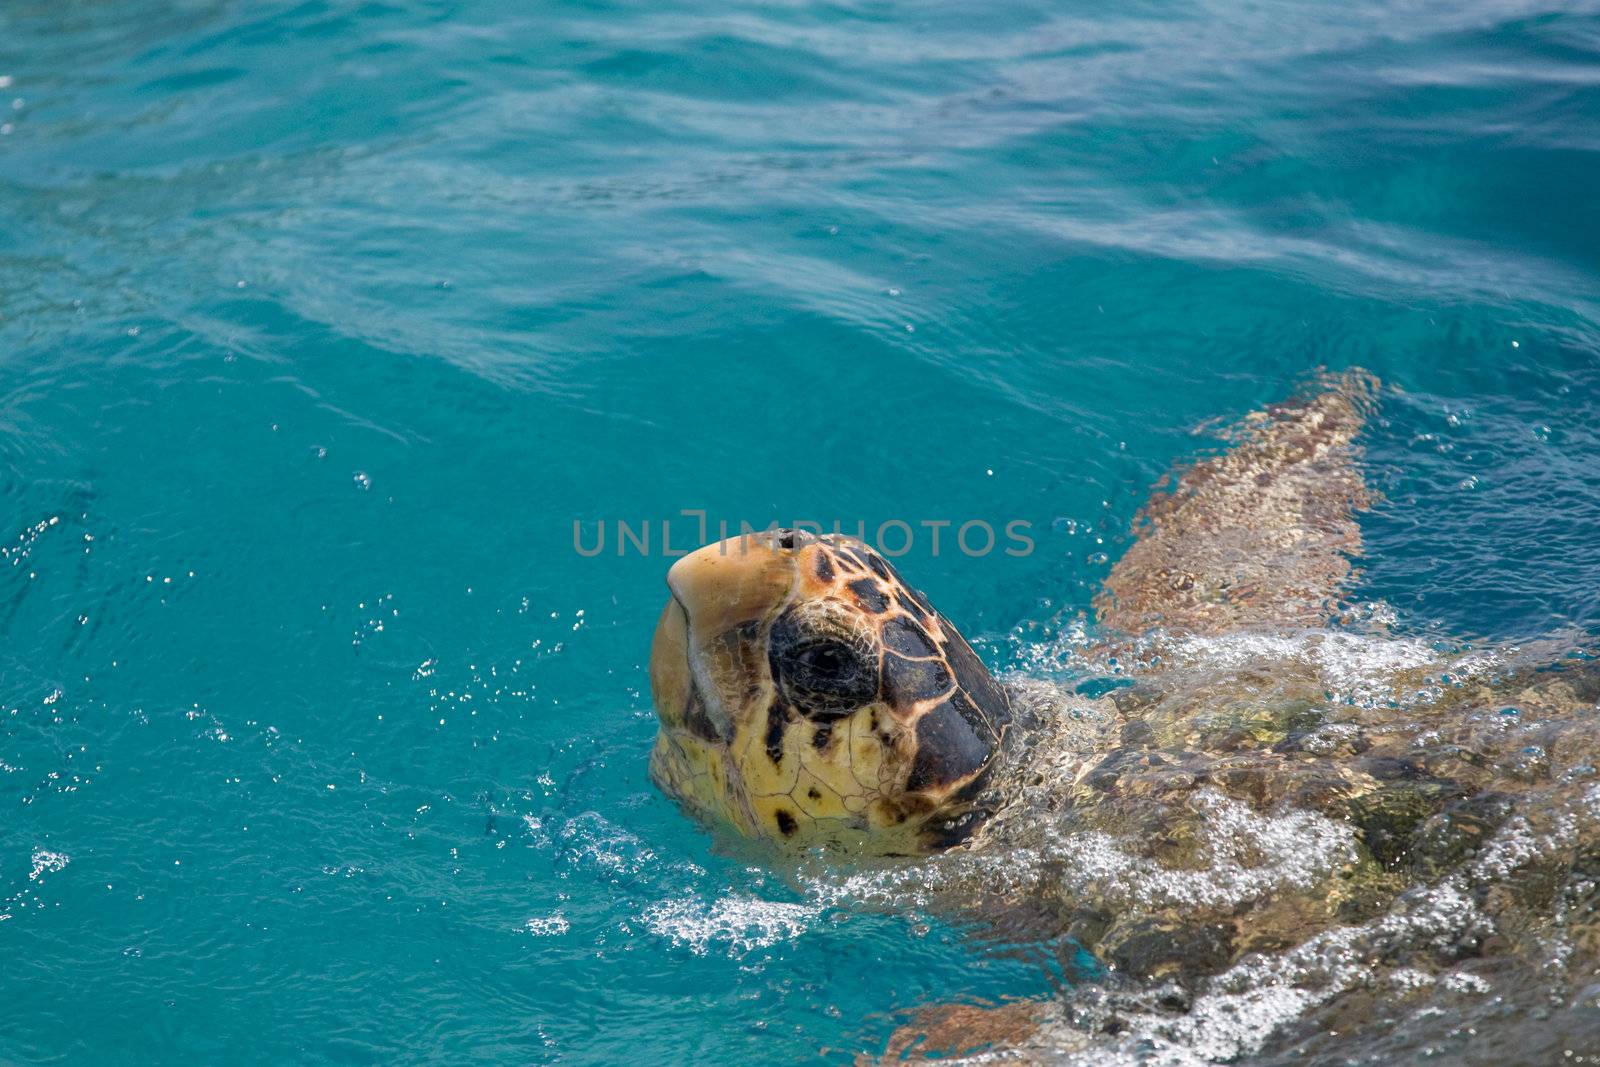 Loggerhead Sea Turtle swimming in the blue water near Zakynthos island - summer holiday destination in Greece